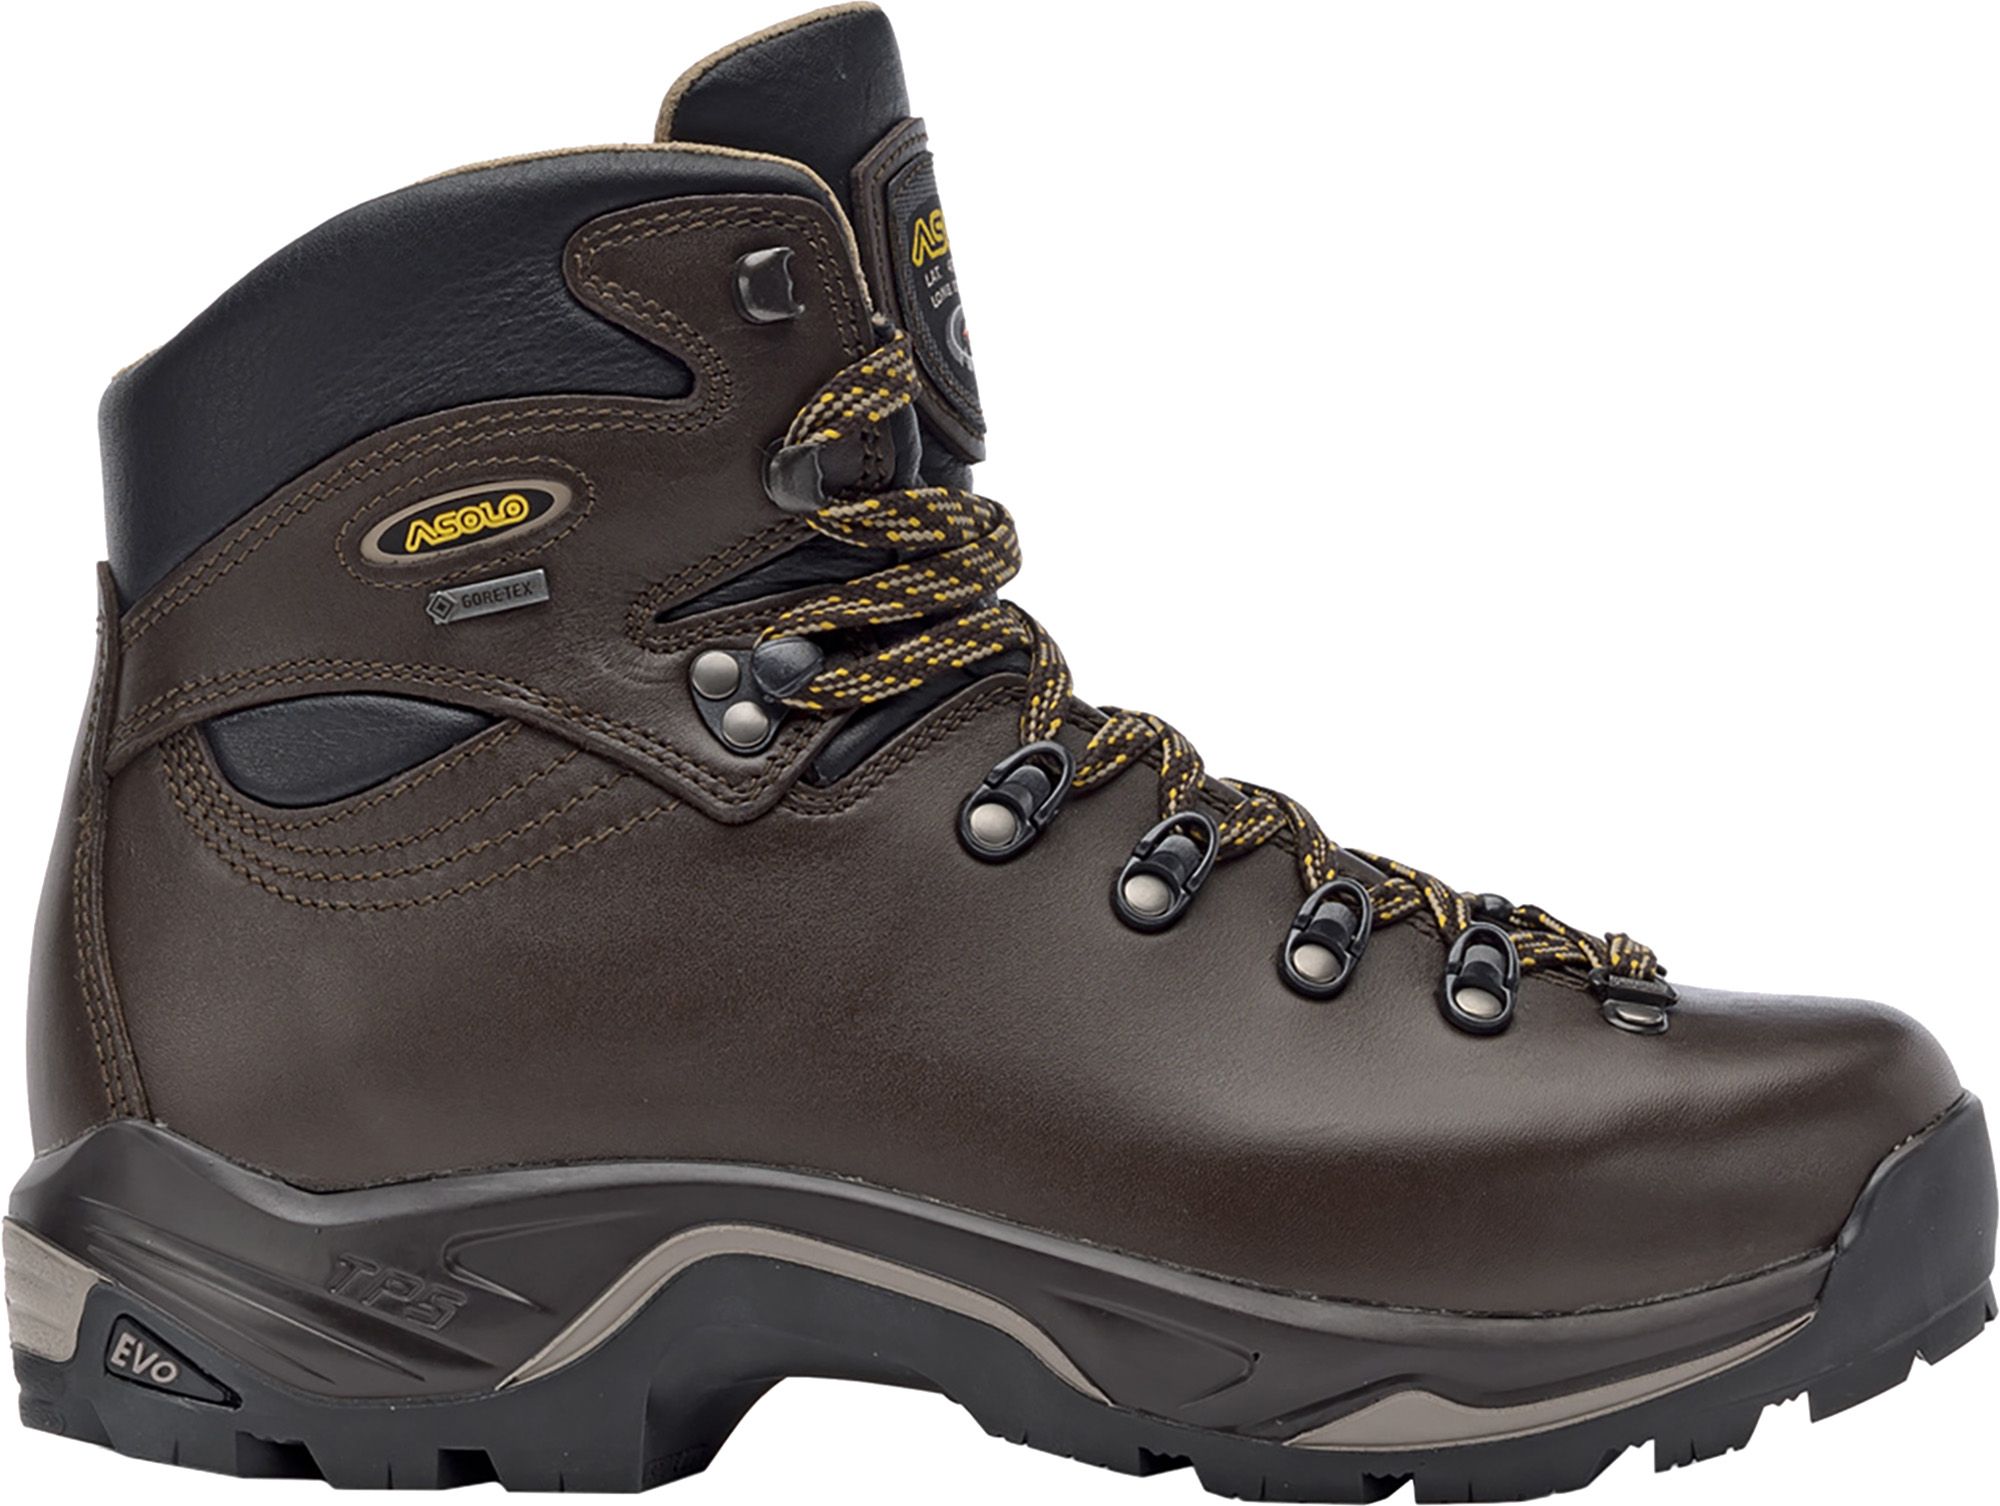 Photos - Backpack ASOLO Men's TPS 520 GV EVO GTX Hiking Boots, Size 10, Chestnut 23QHGMMTPS5 